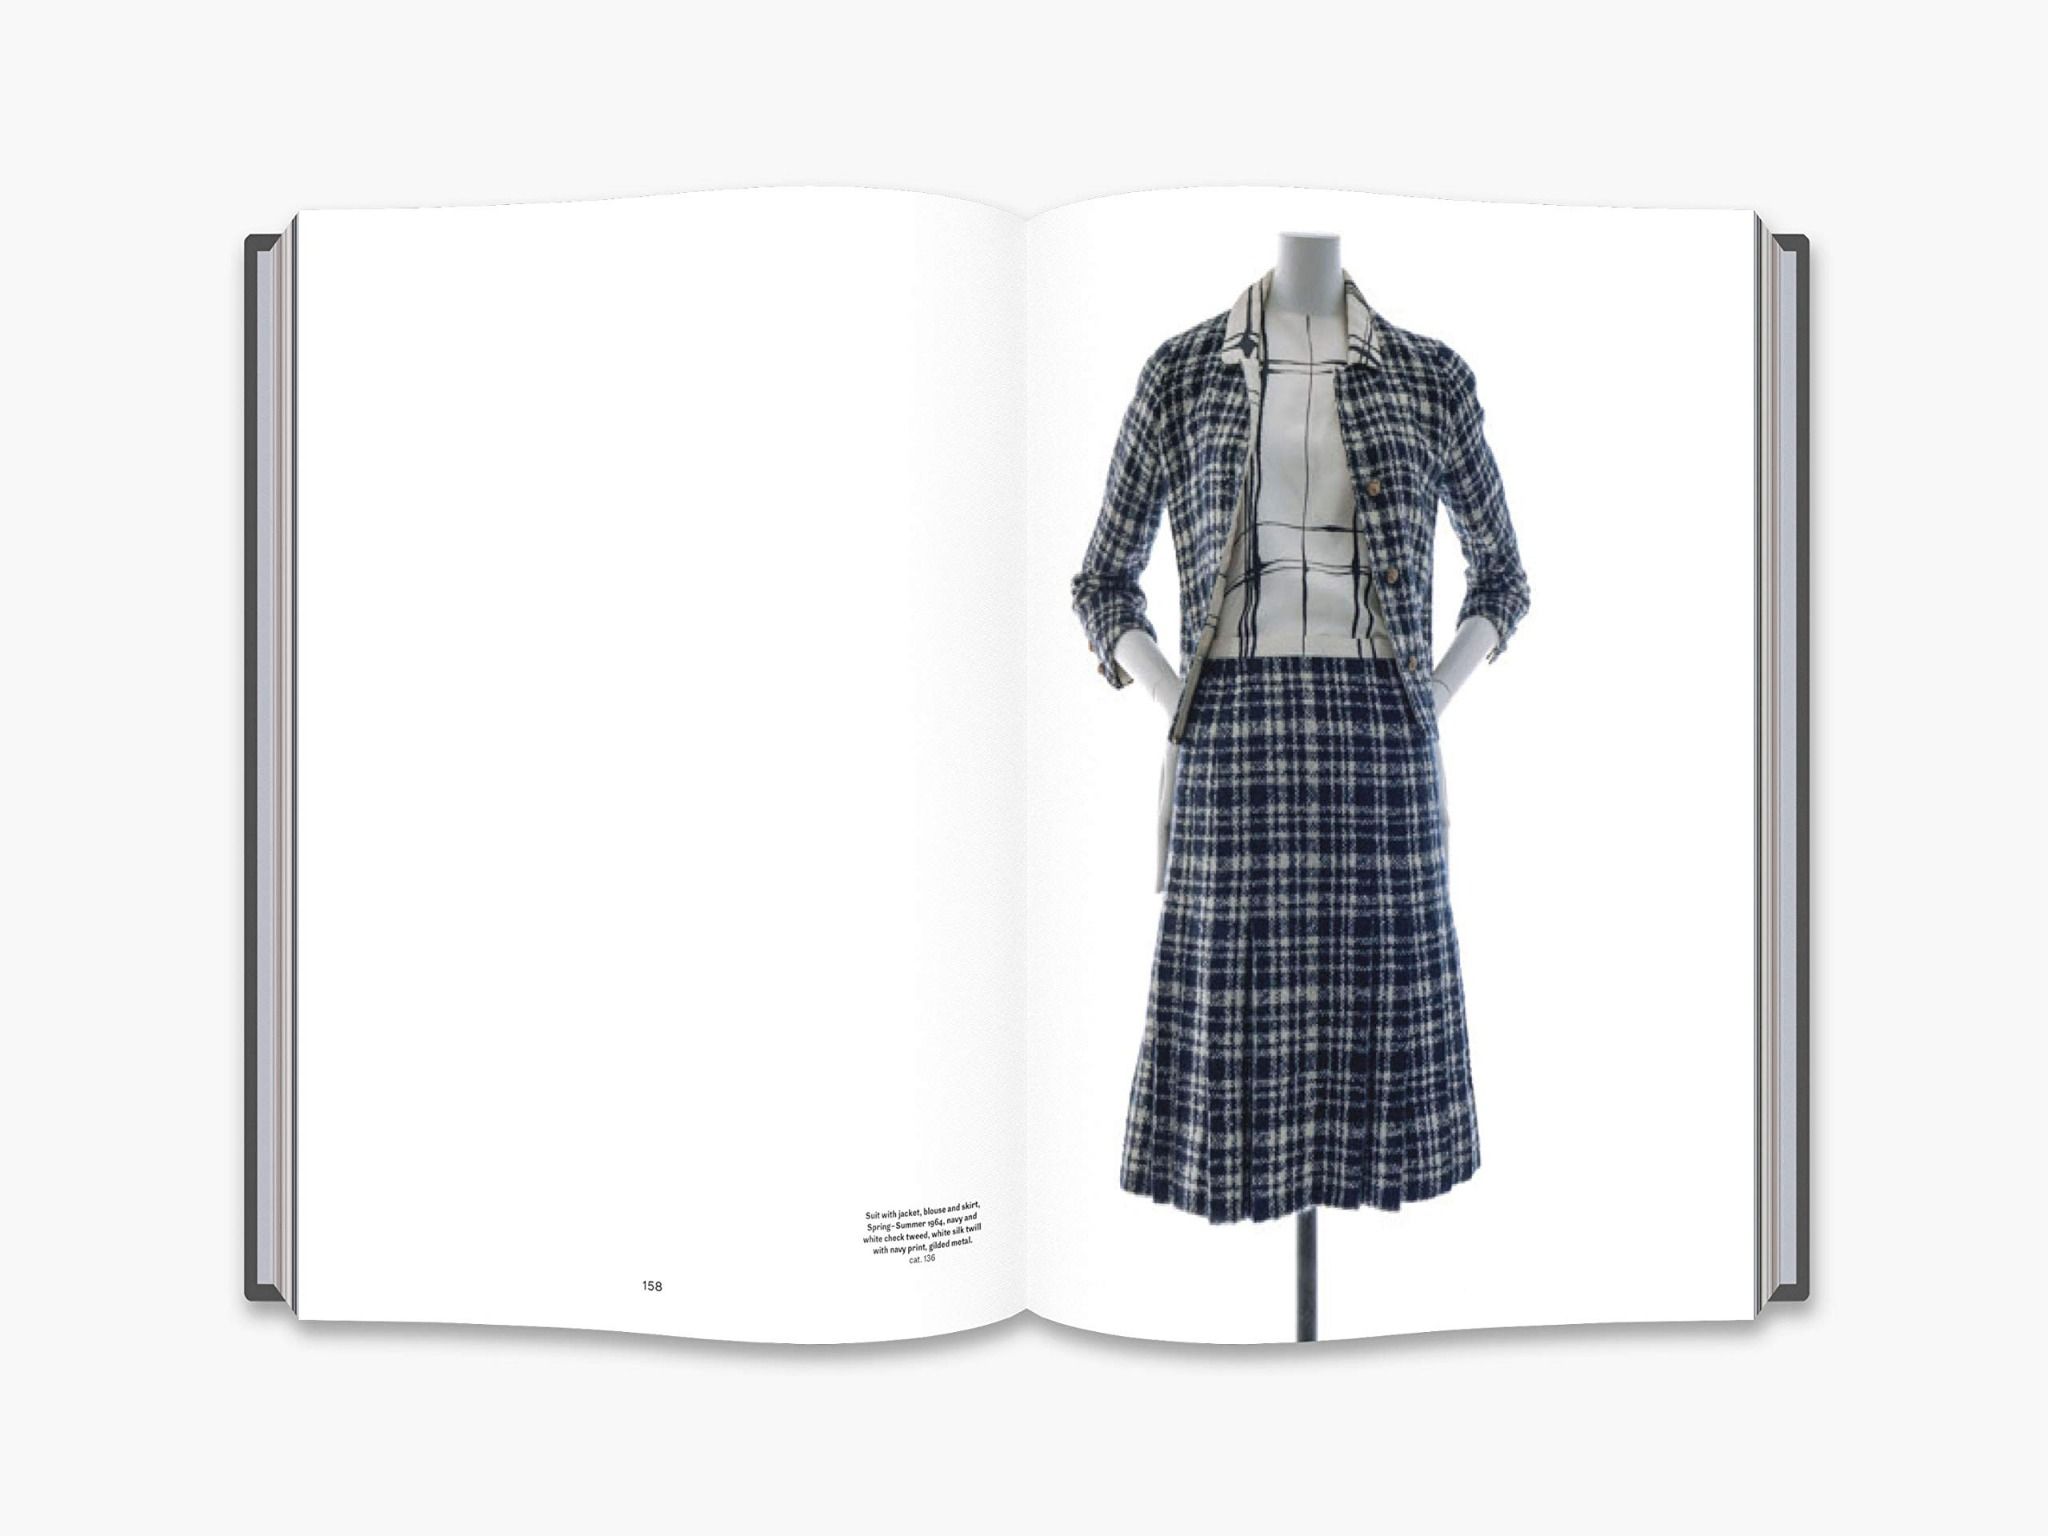  Gabrielle Chanel Fashion Manifesto_Arzalluz Miren/Saill_9780500023464_Thames & Hudson 